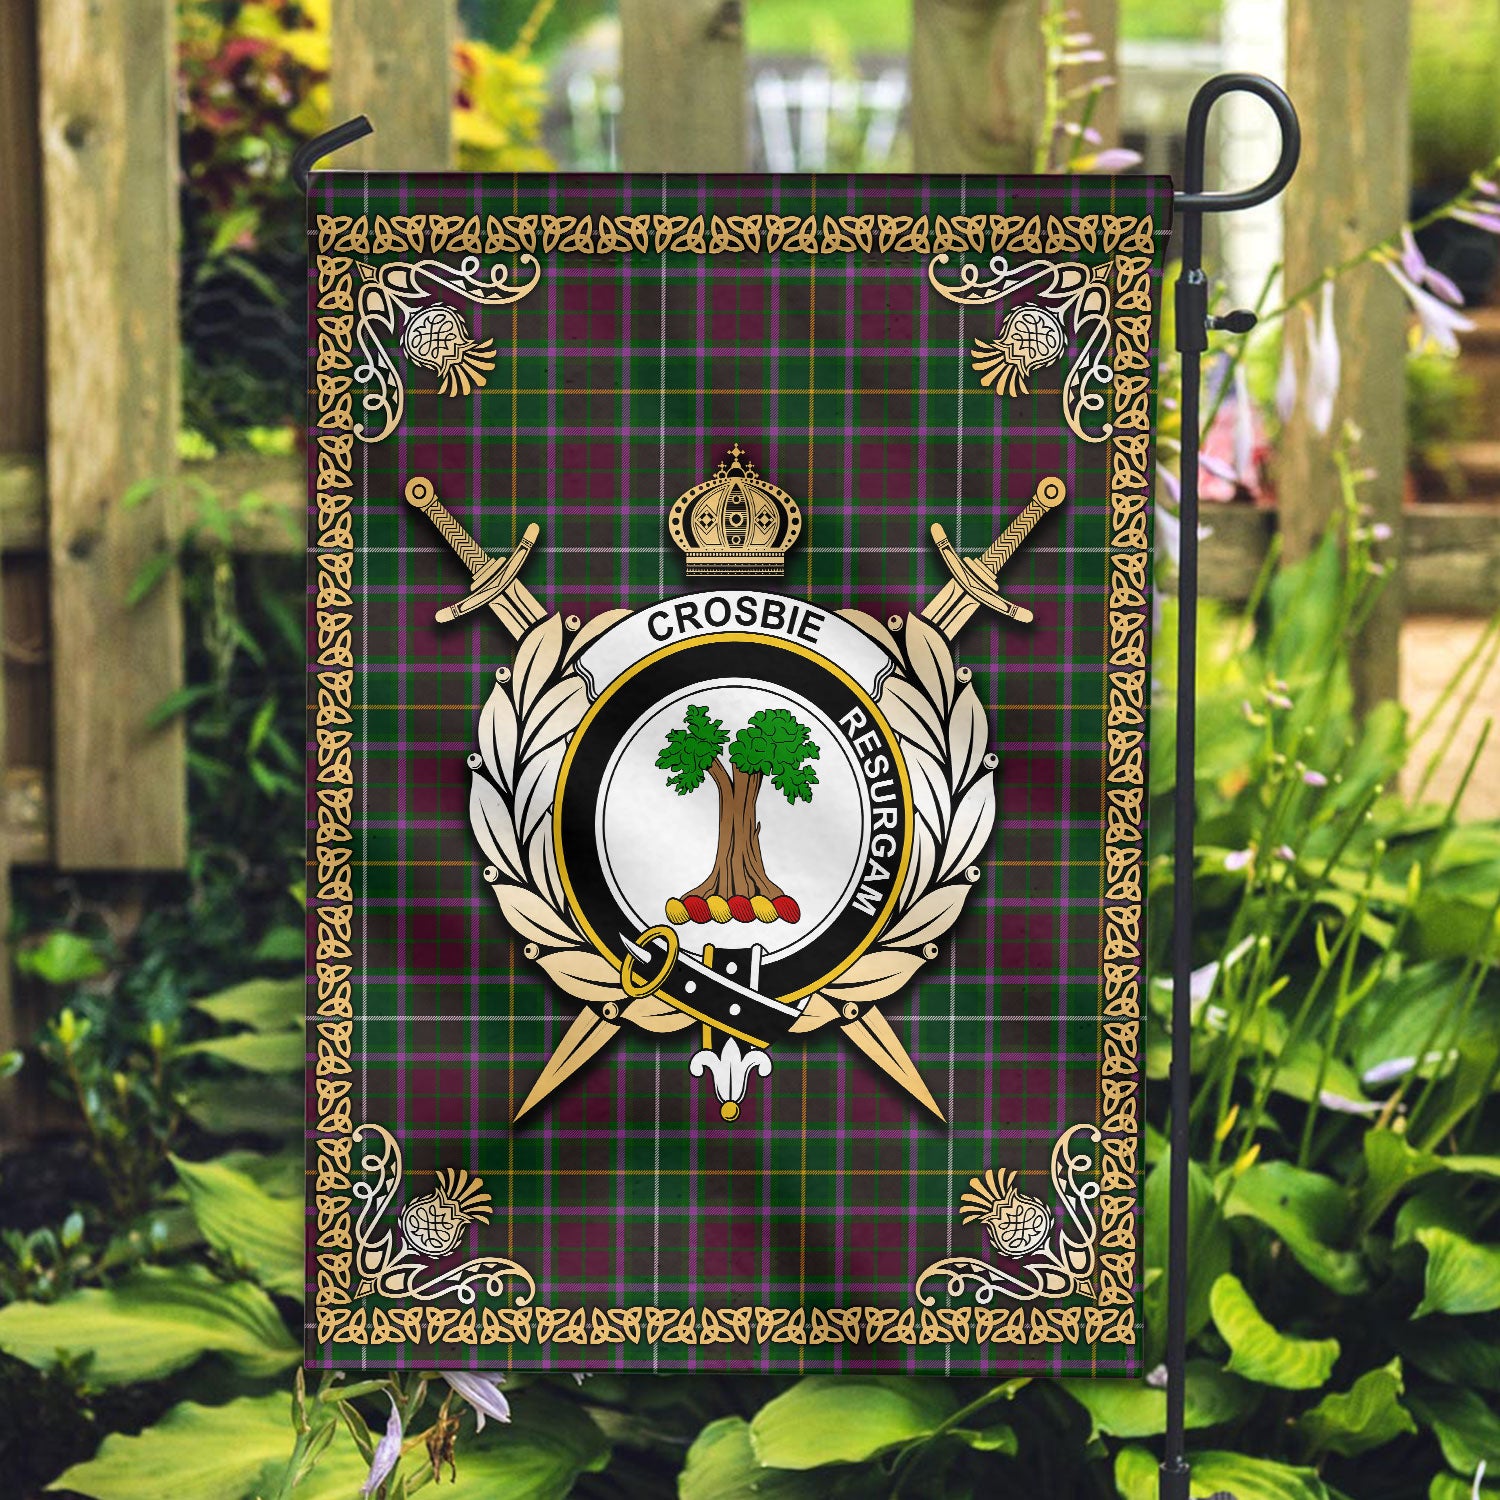 Crosbie (or Crosby) Tartan Crest Garden Flag - Celtic Thistle Style